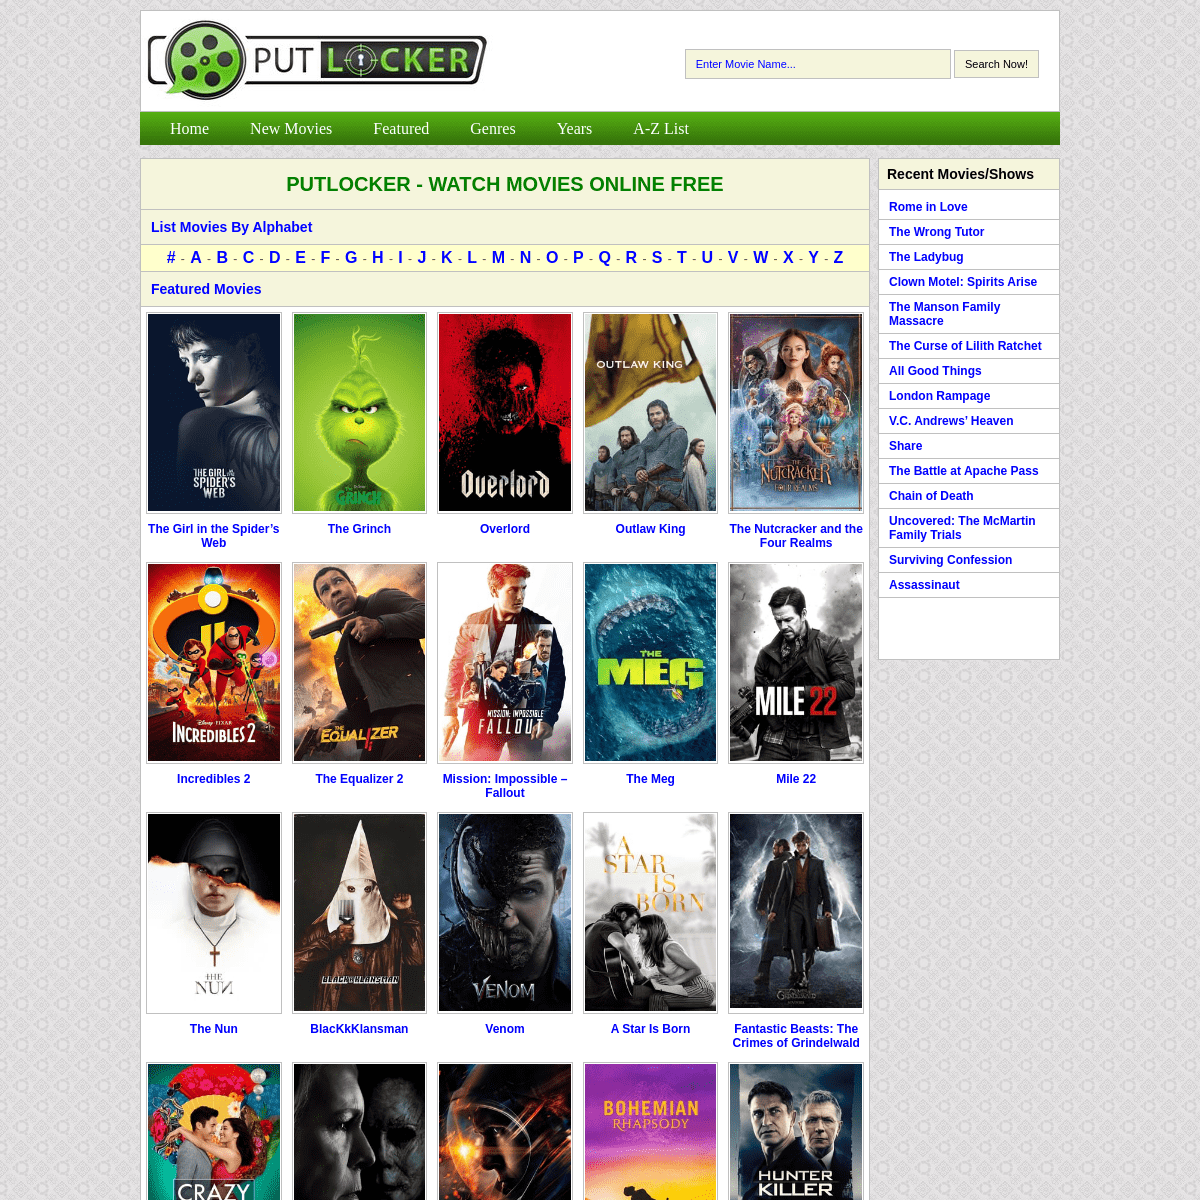 putlocker 123 download movies free